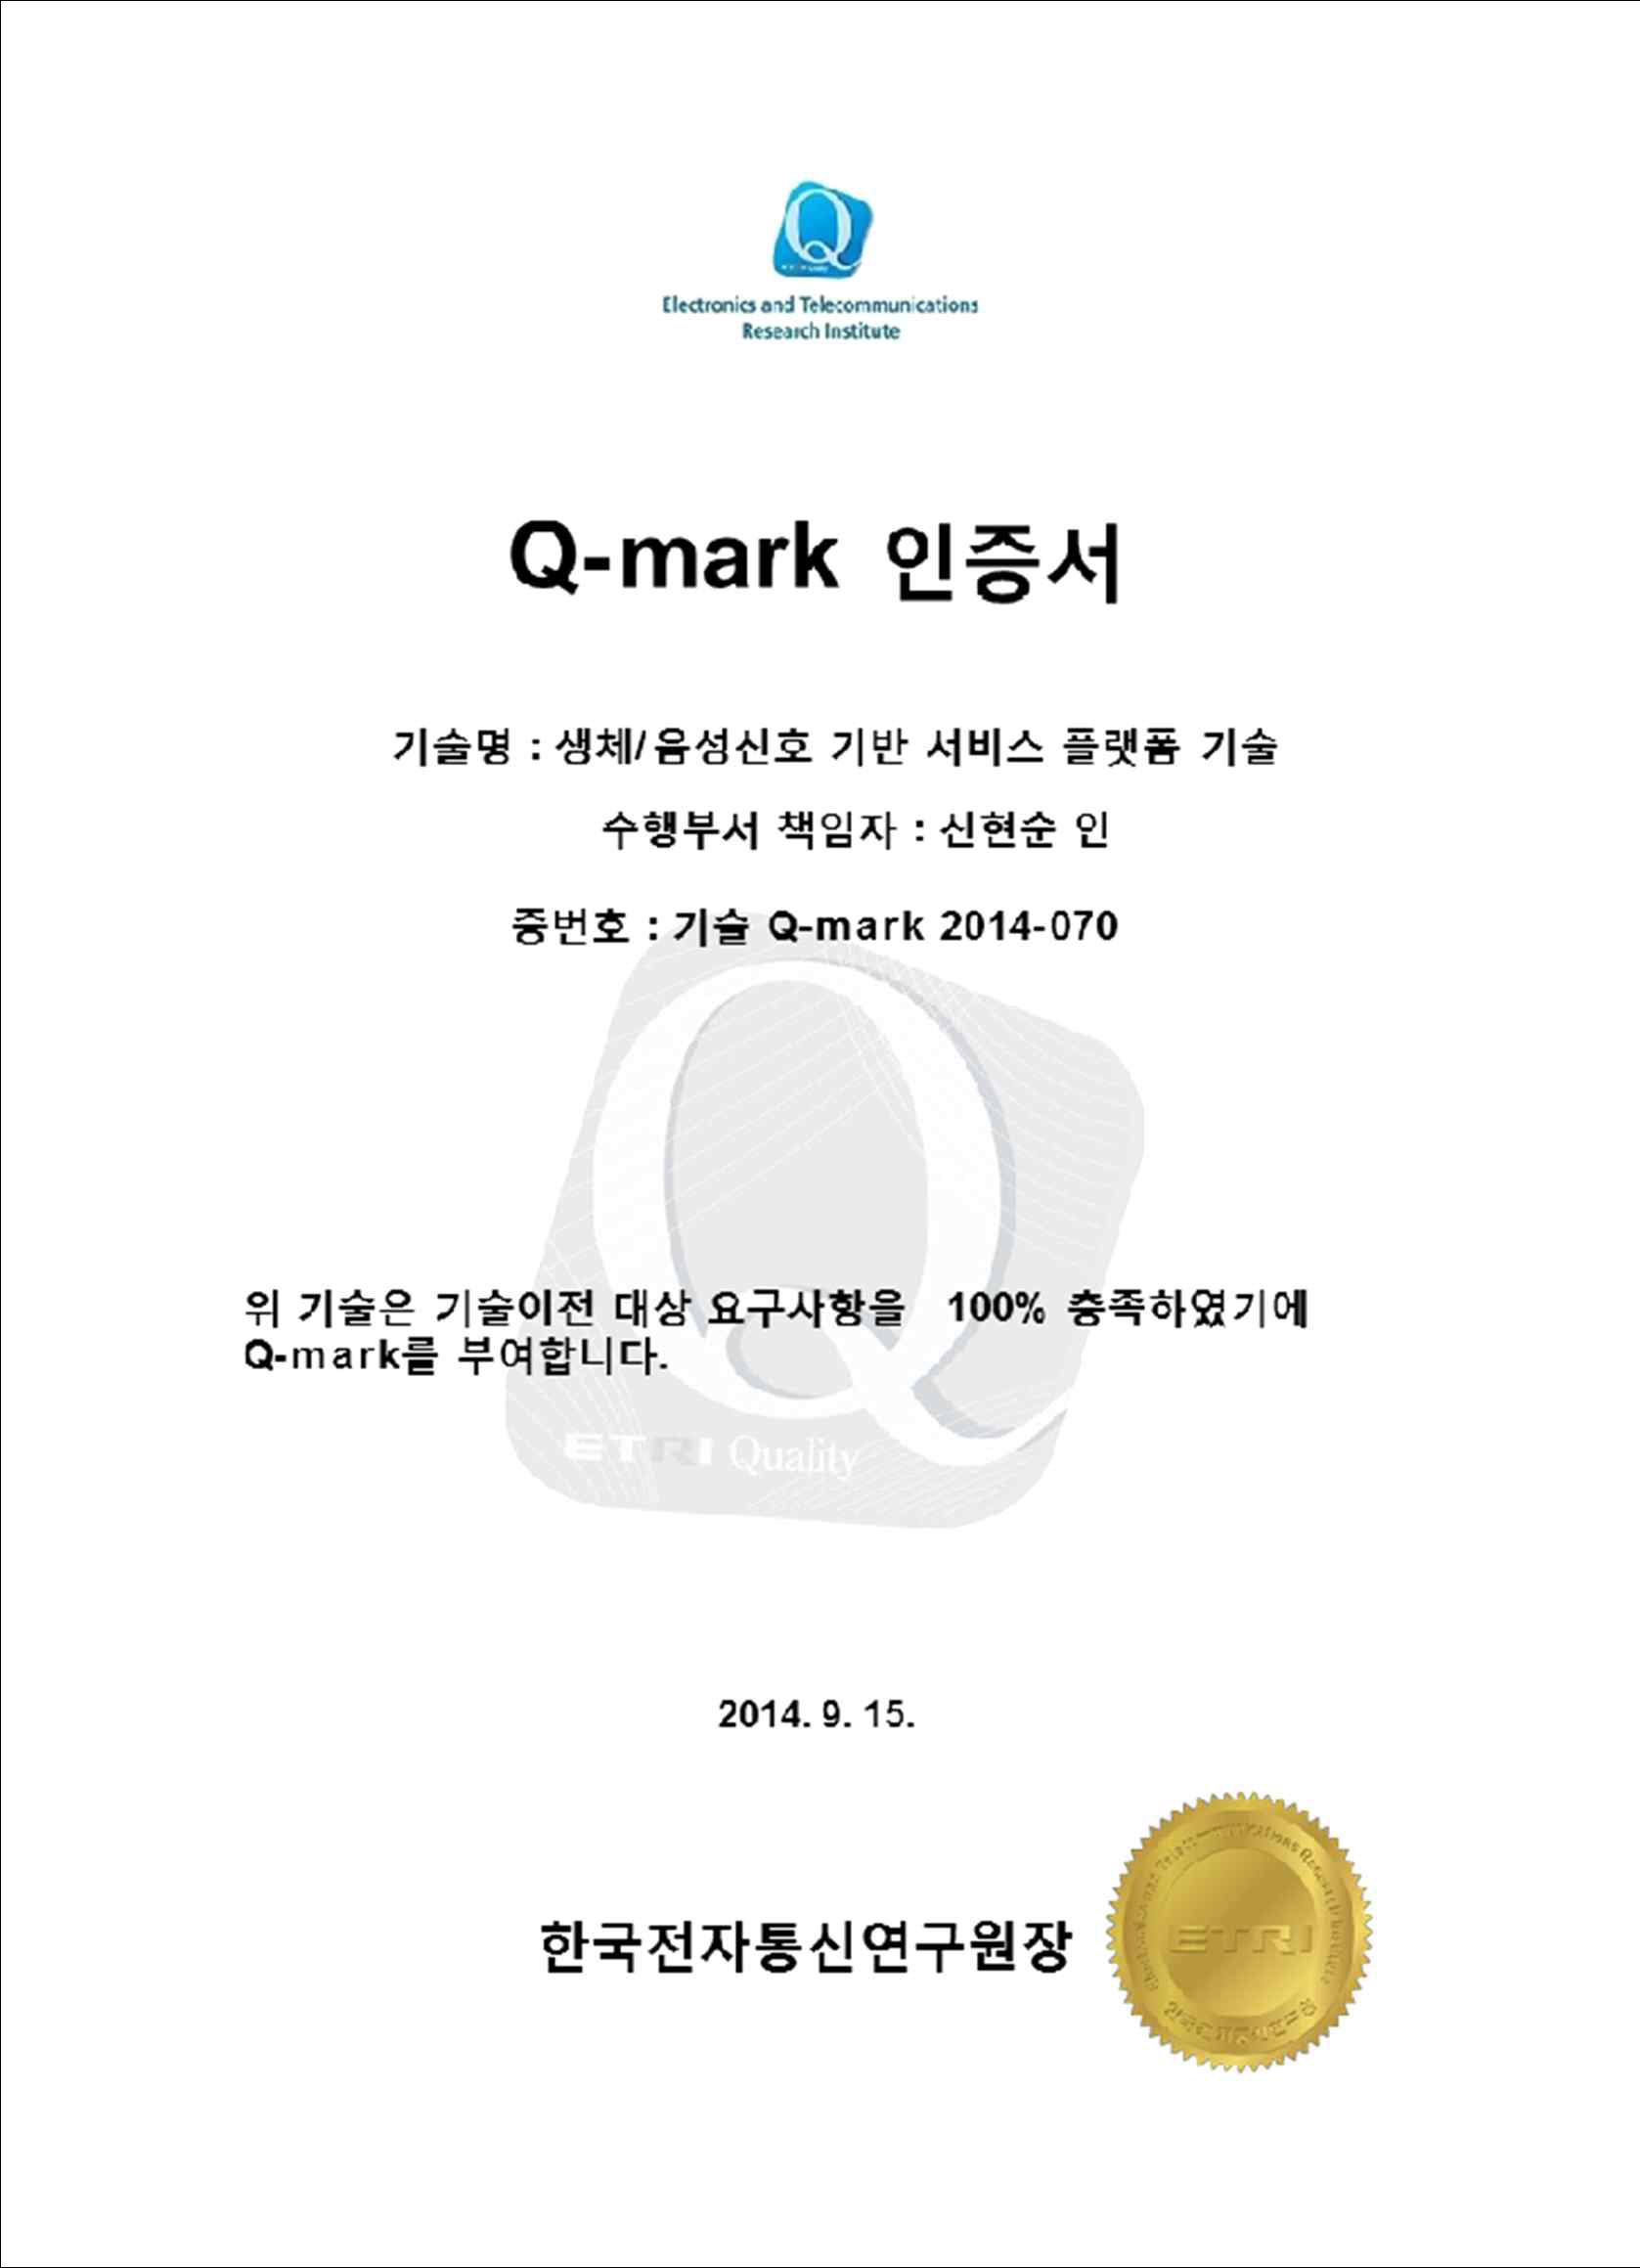 SGS 기술 Q-mark 인증서